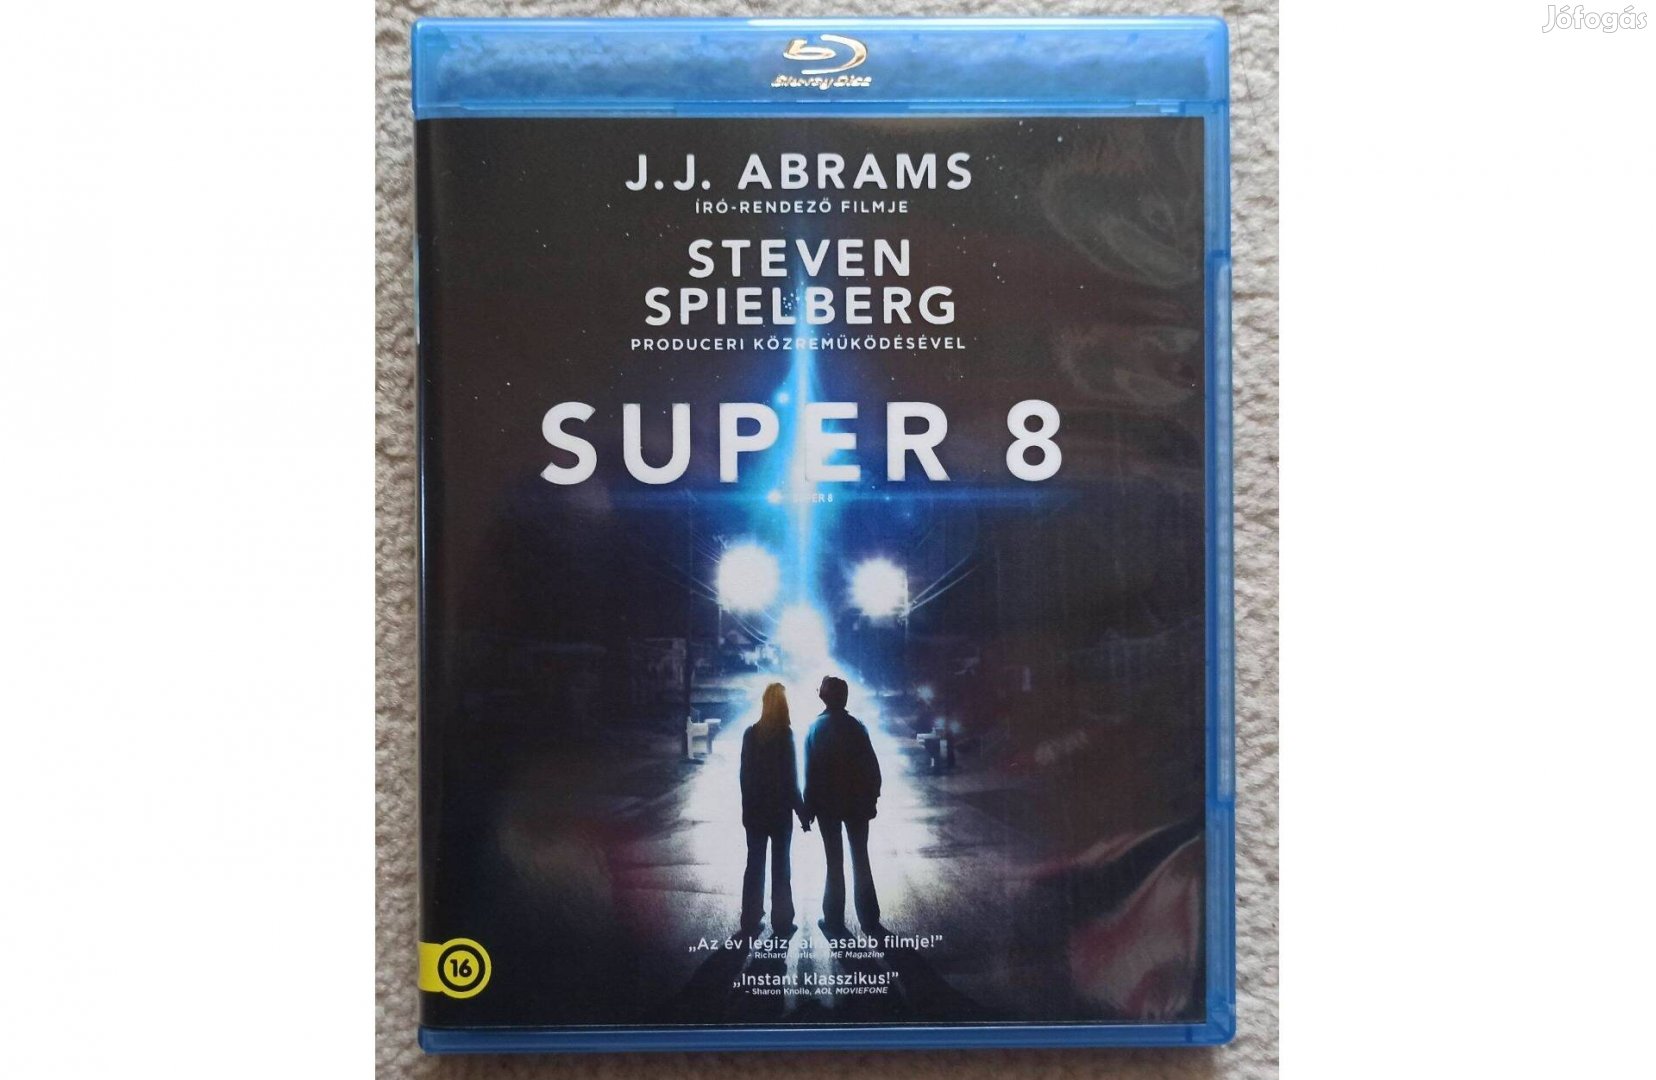 Super 8 blu-ray blu ray film